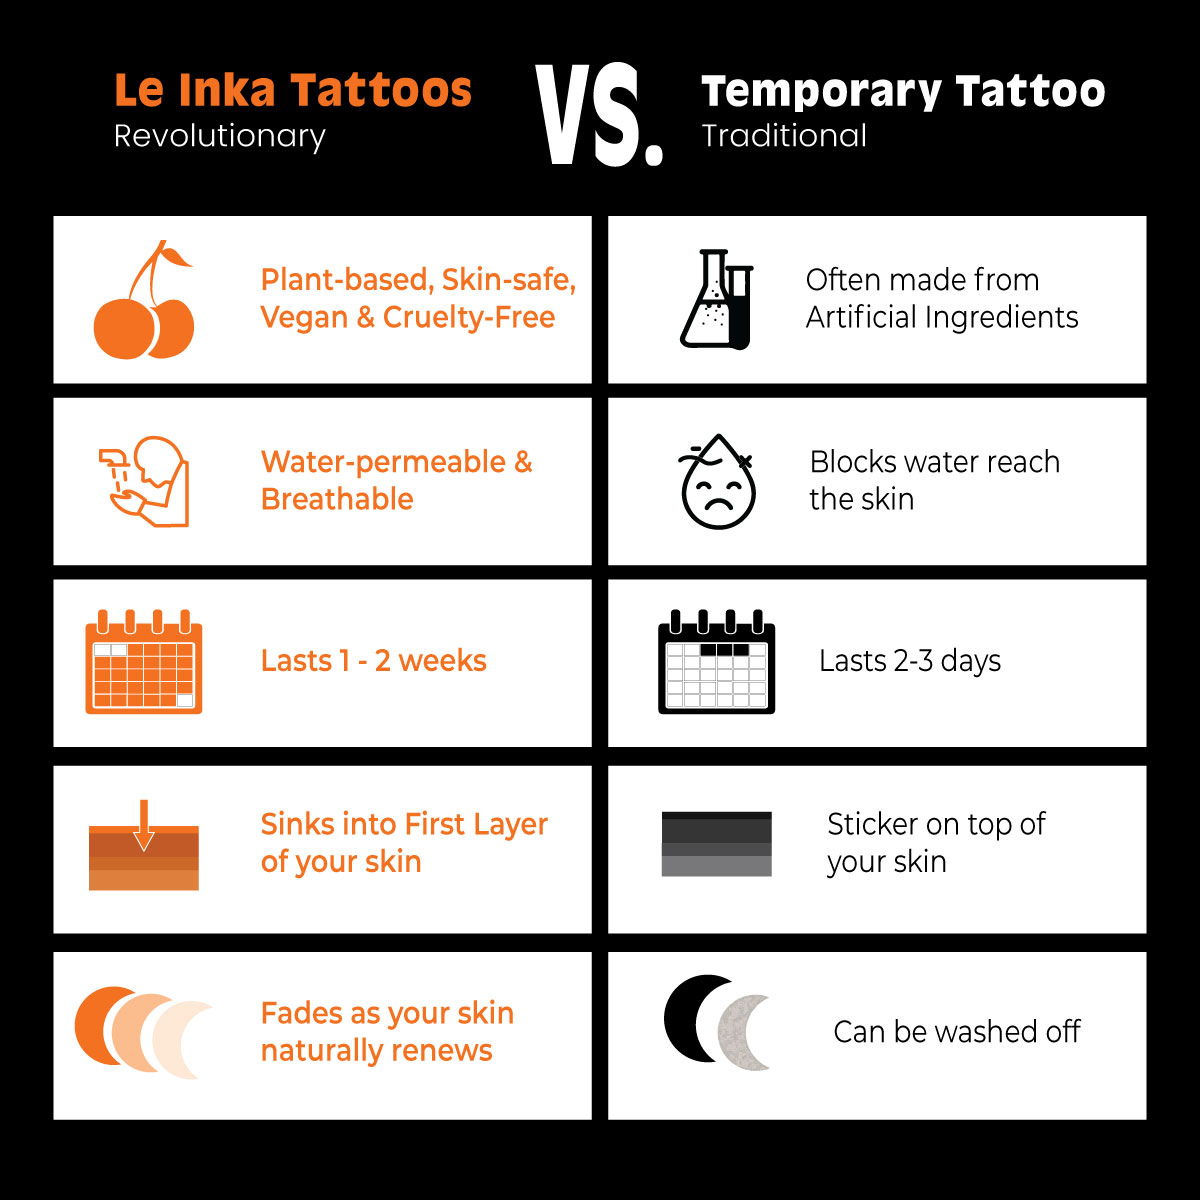 Le Inka Tattoos - Symmetrical Collection